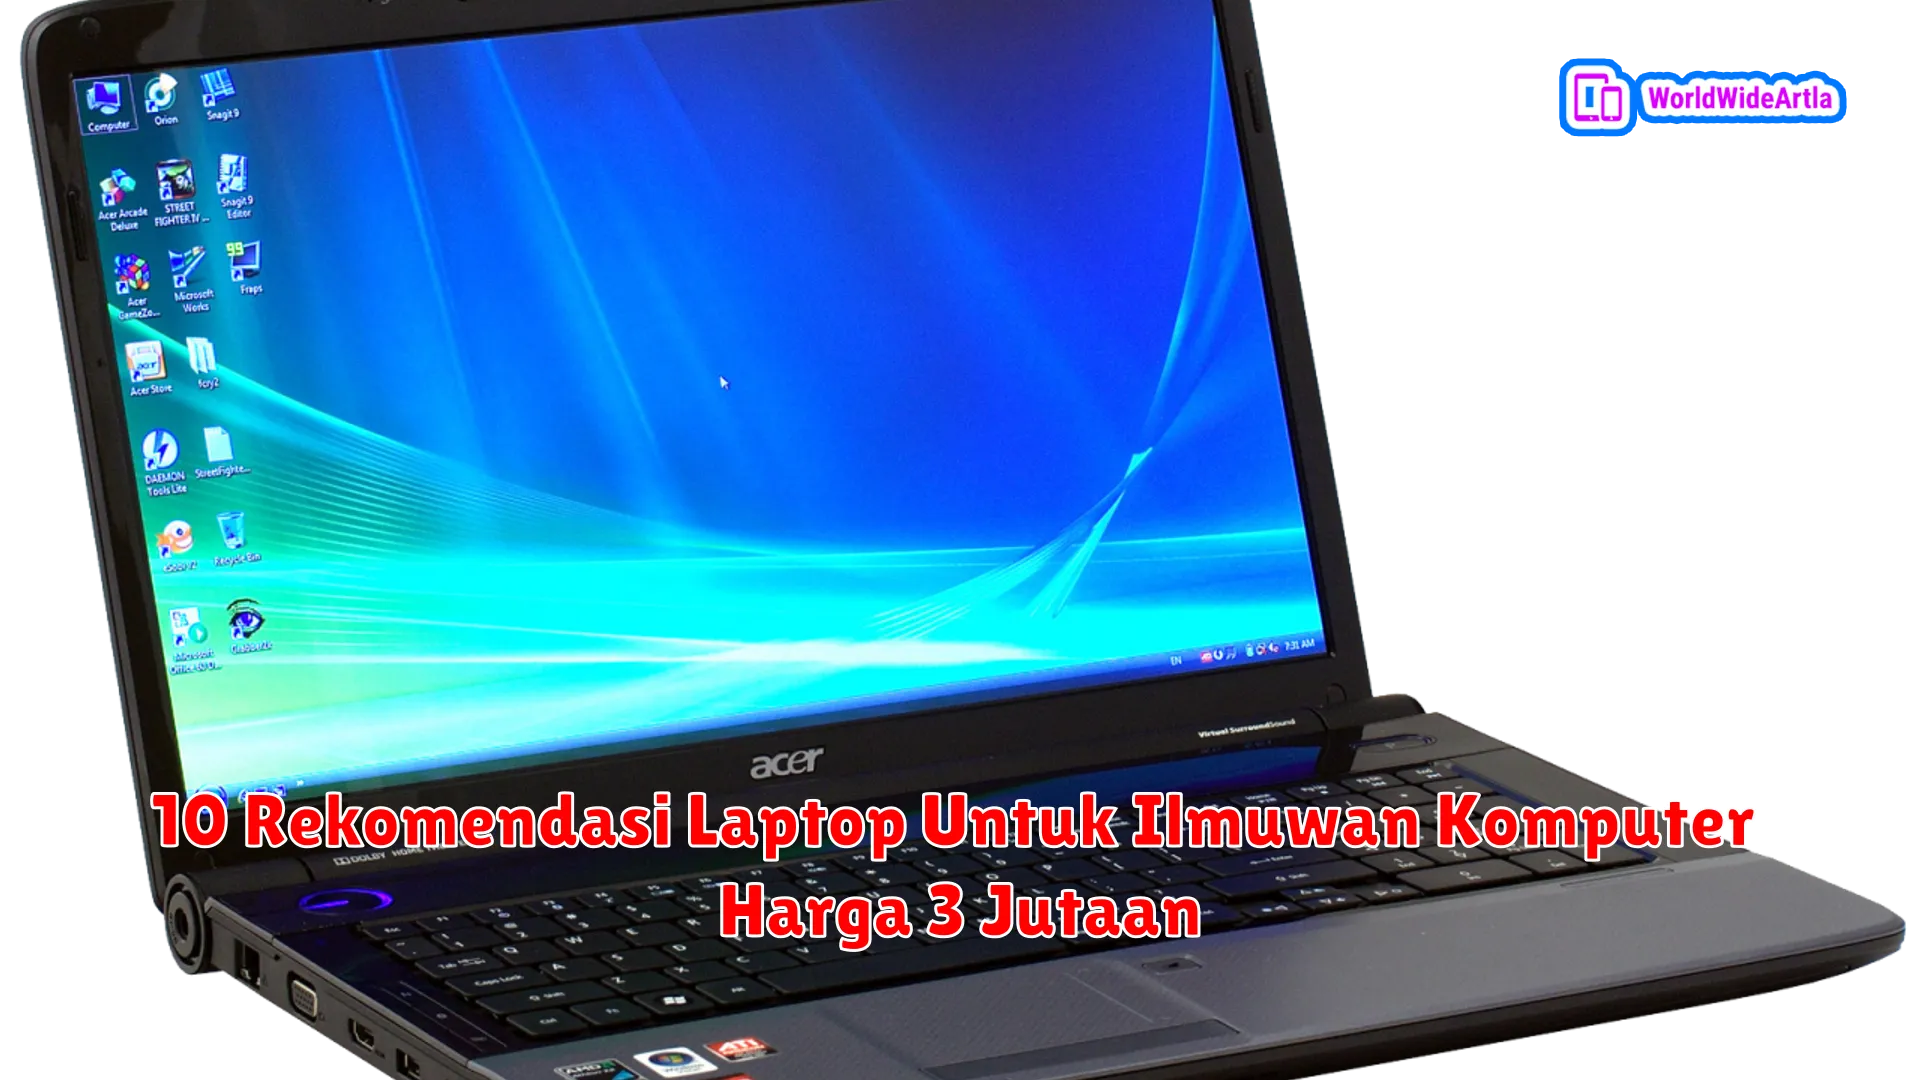 10 Rekomendasi Laptop Untuk Ilmuwan Komputer Harga 3 Jutaan